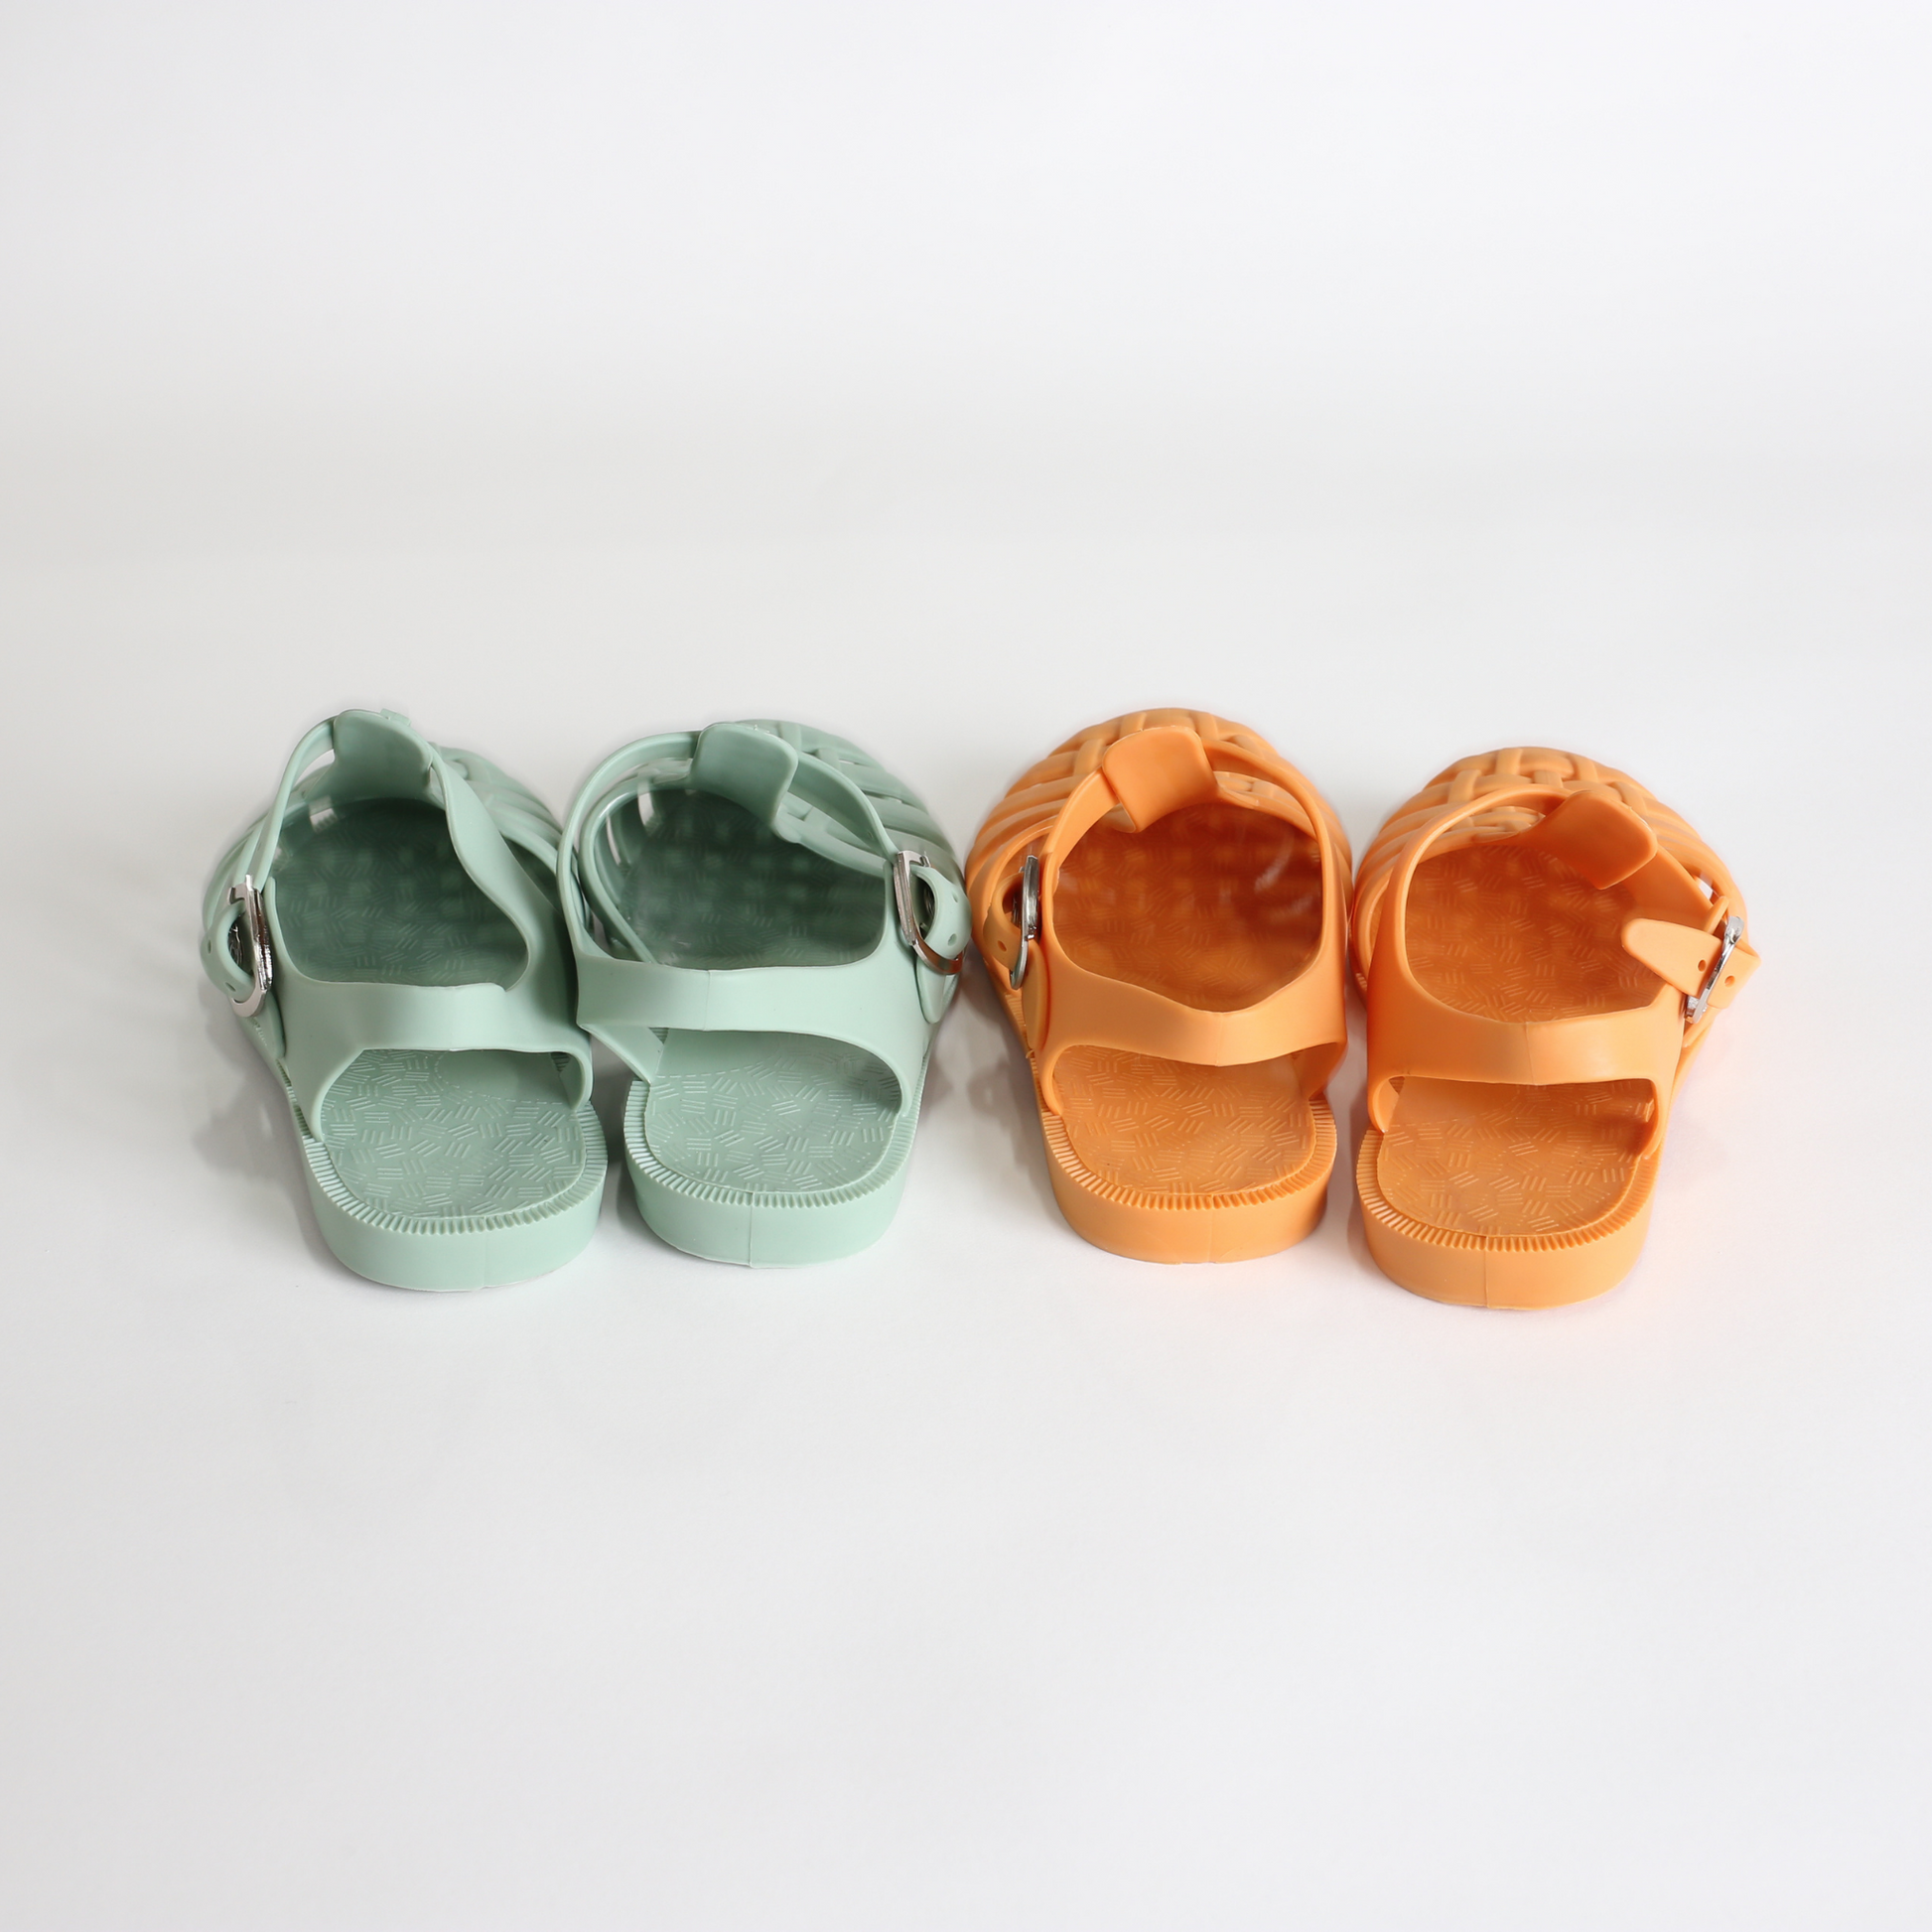 OUTLET ラバーサンダル  rubber sandals (こども用) - kids clothes shop GUZUGUZU